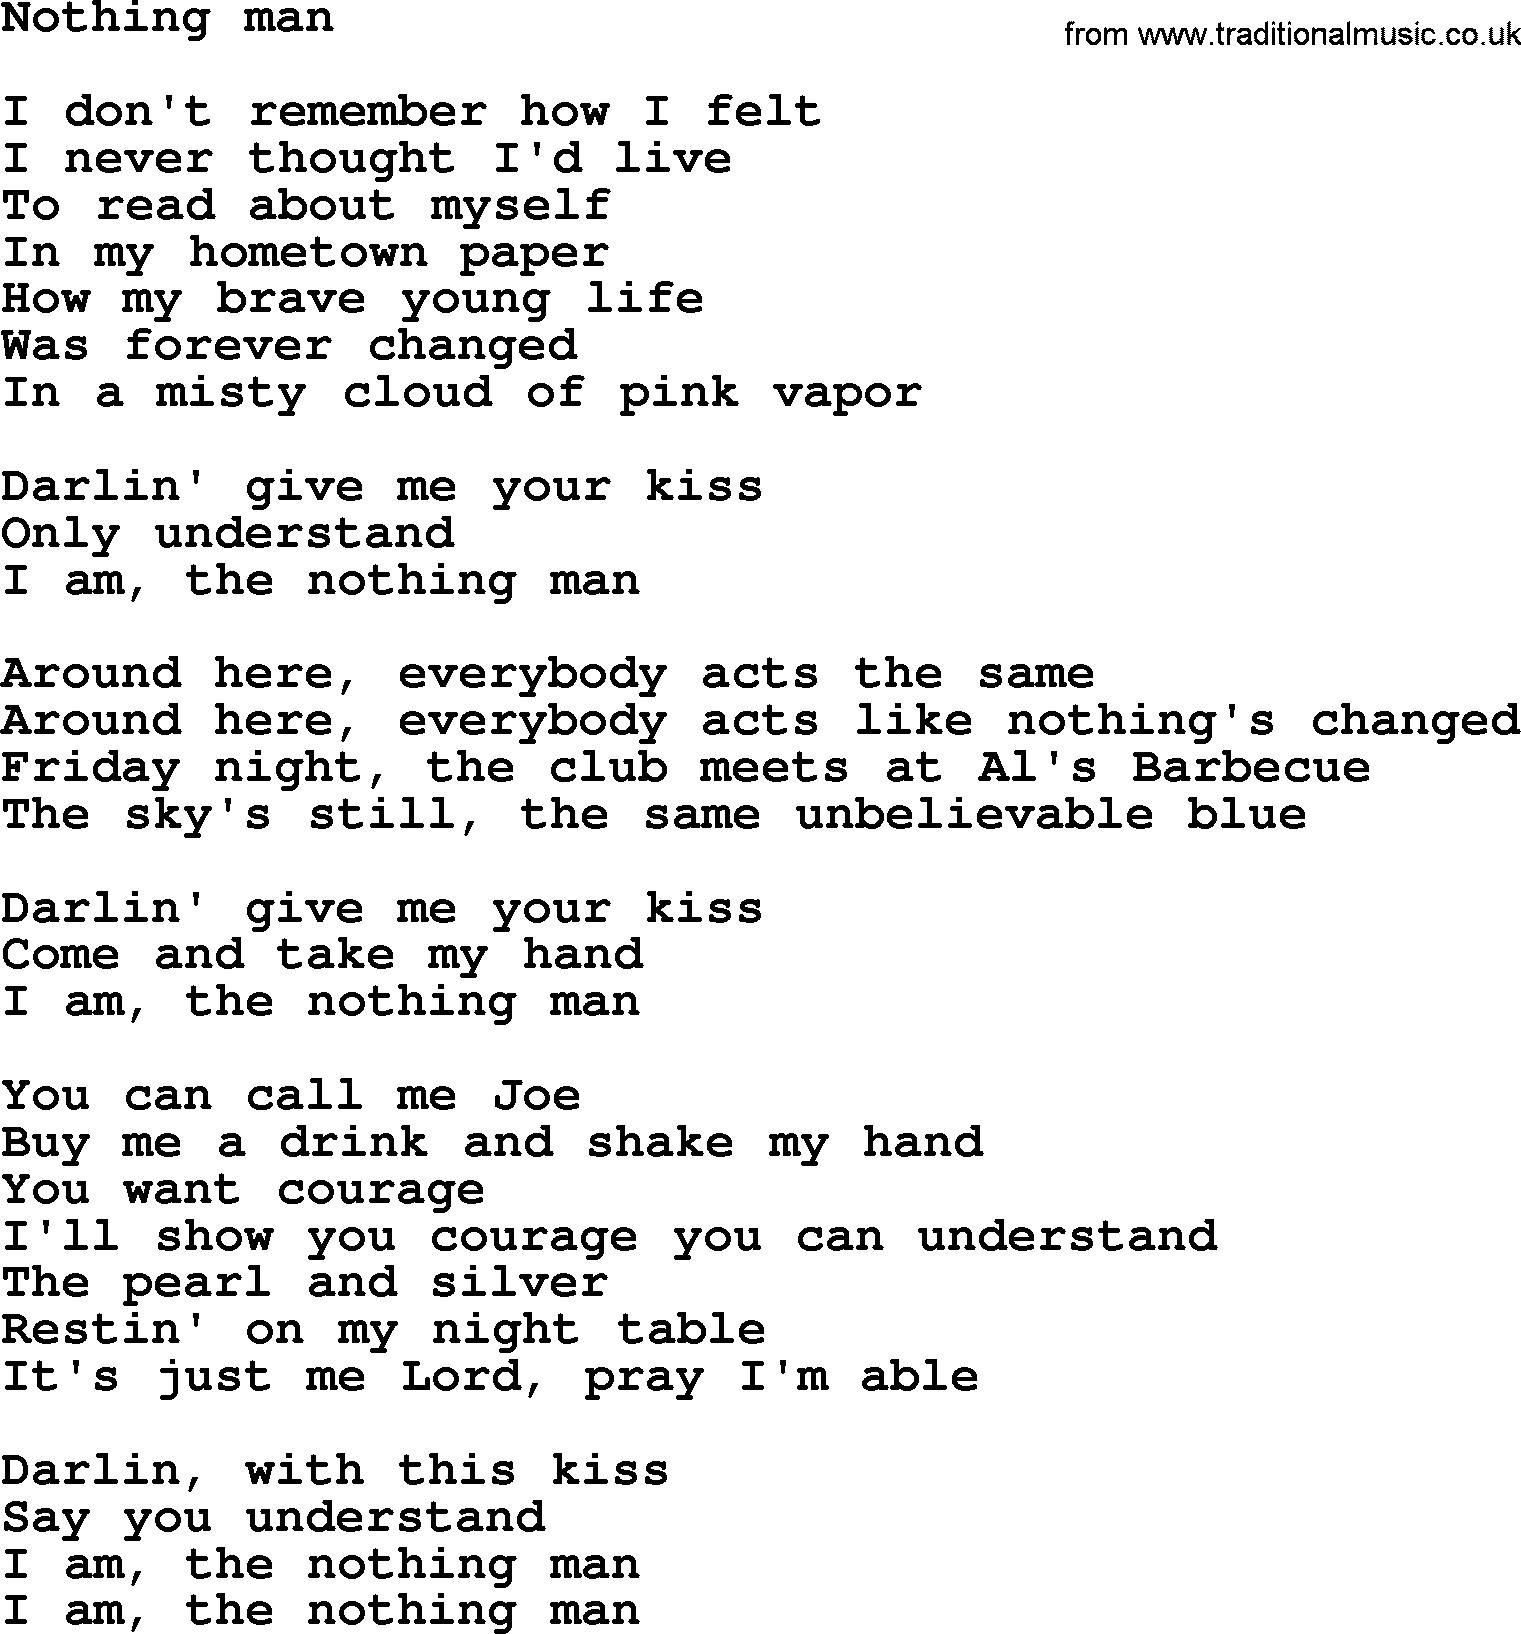 Bruce Springsteen song: Nothing Man lyrics